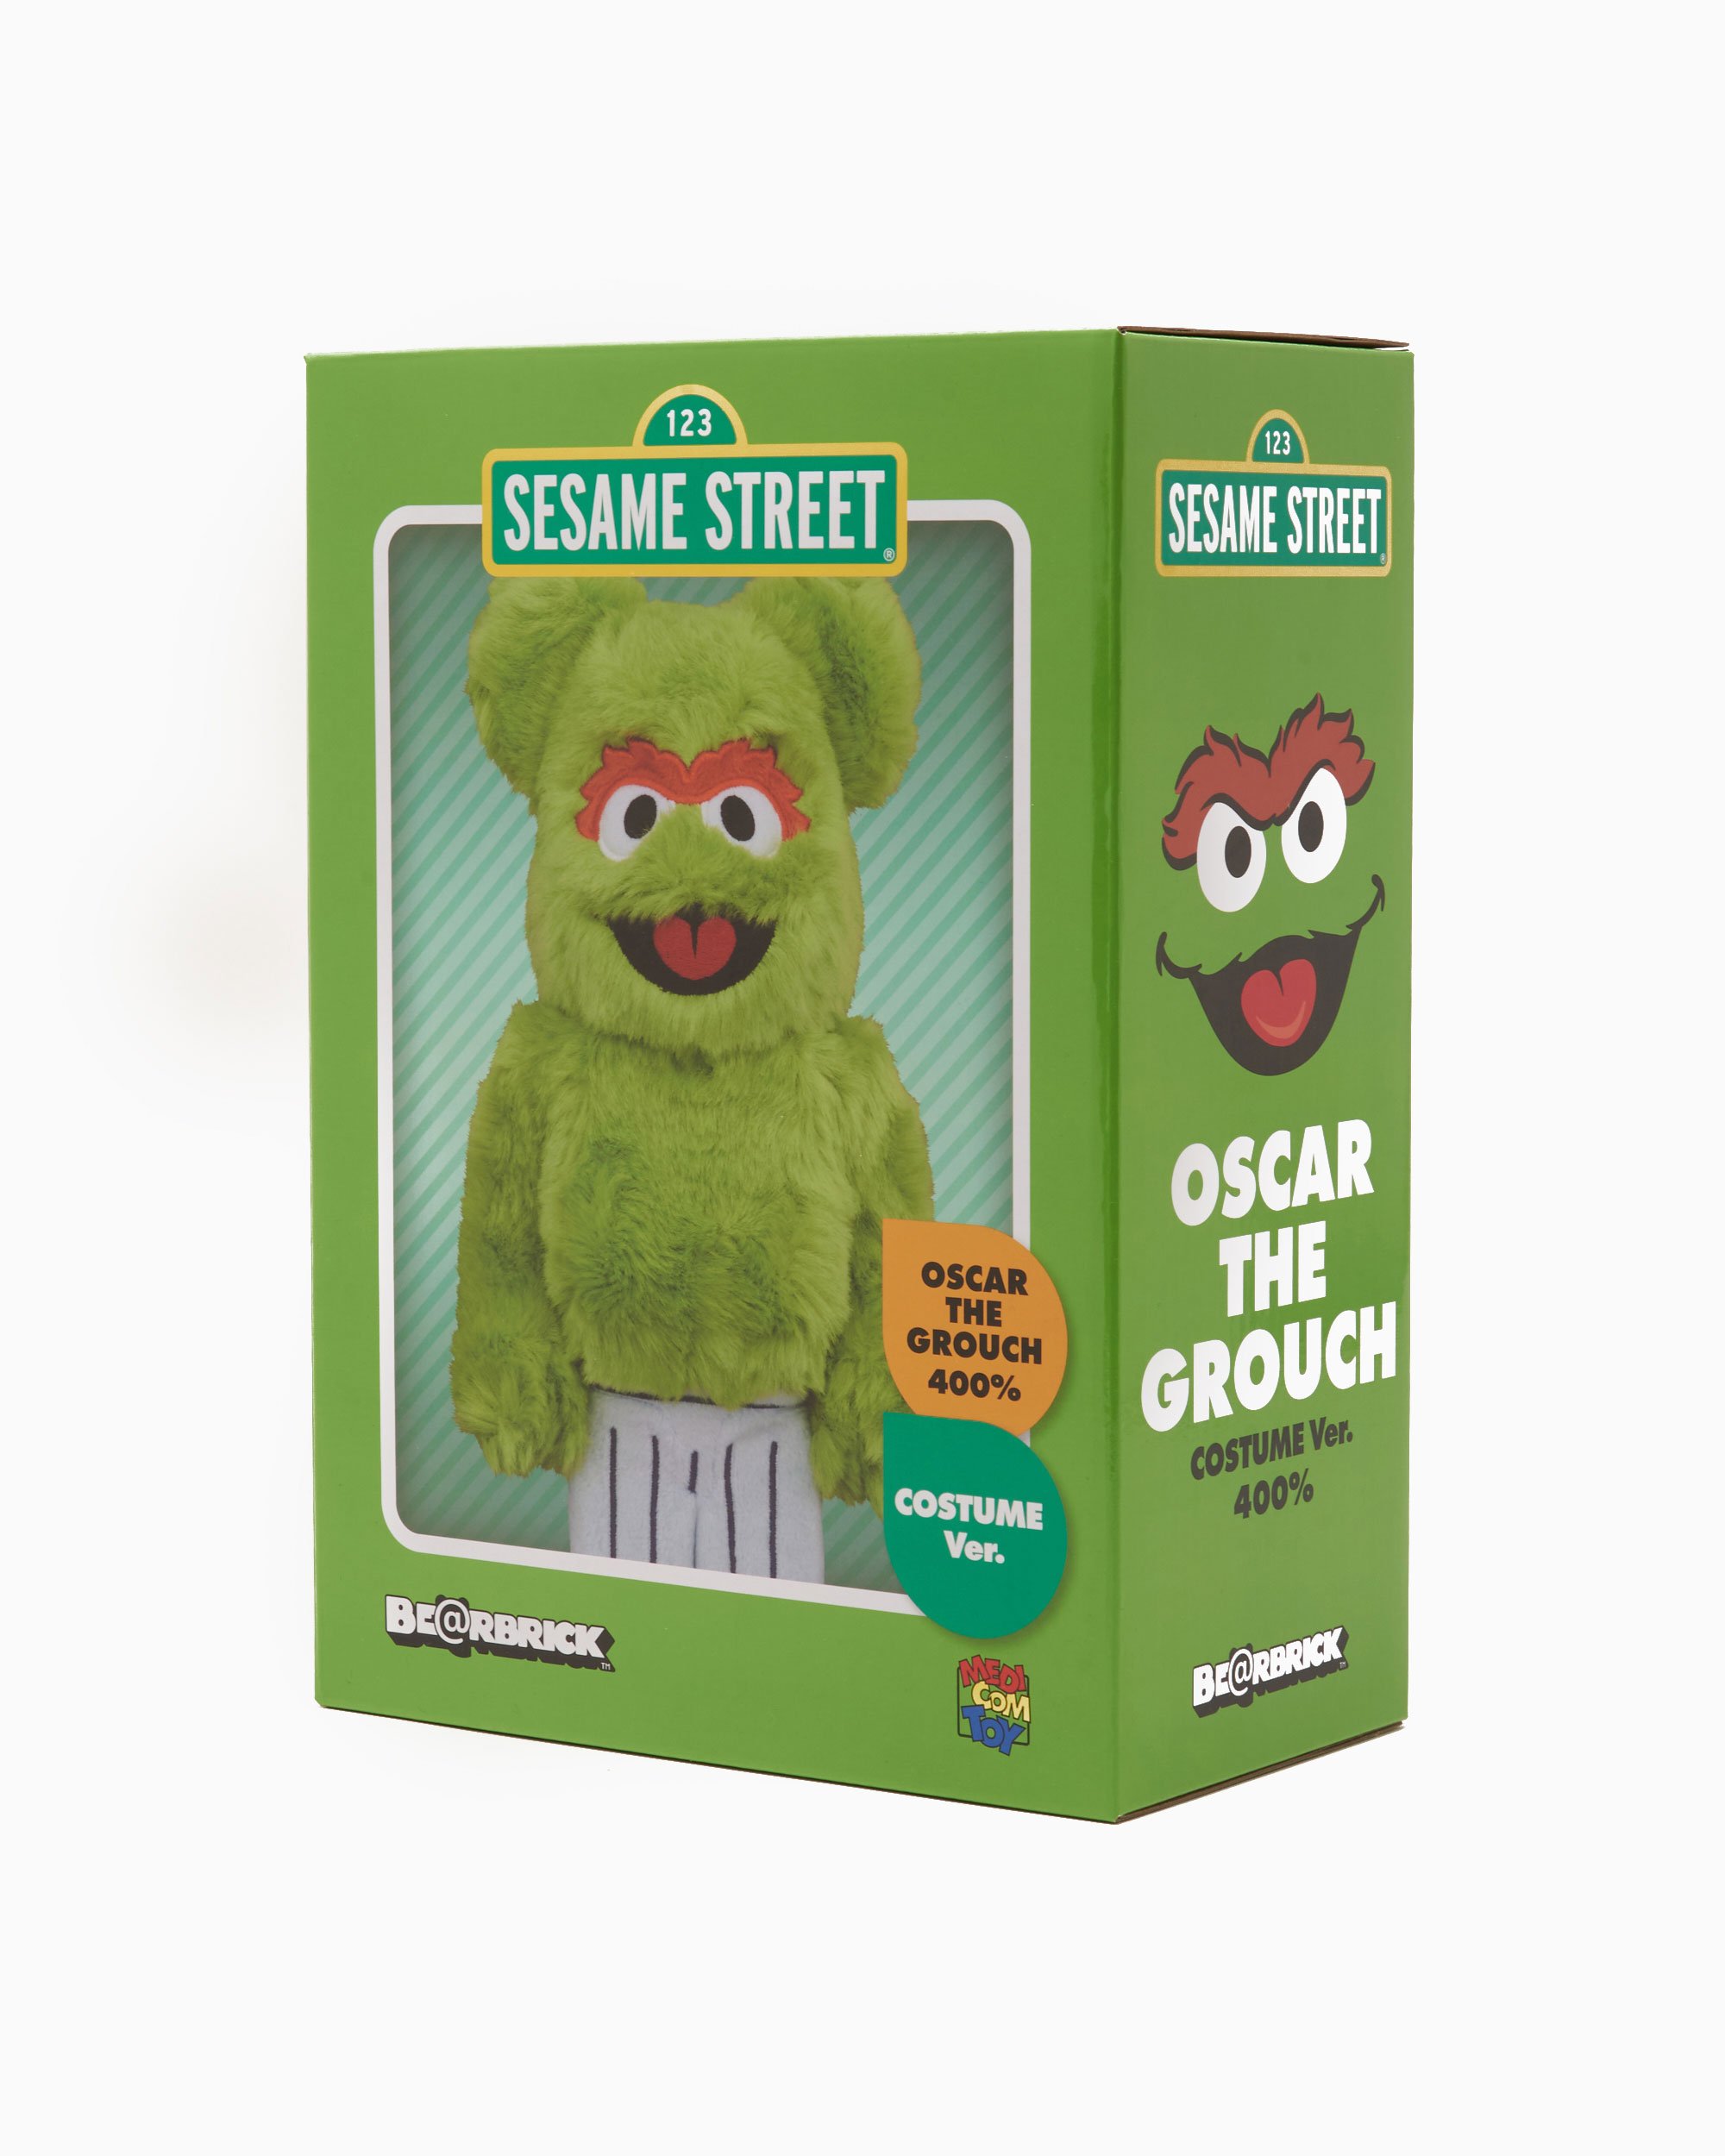 Medicom Toy x Sesame Street Be@rbrick Oscar The Grouch Costume 400 